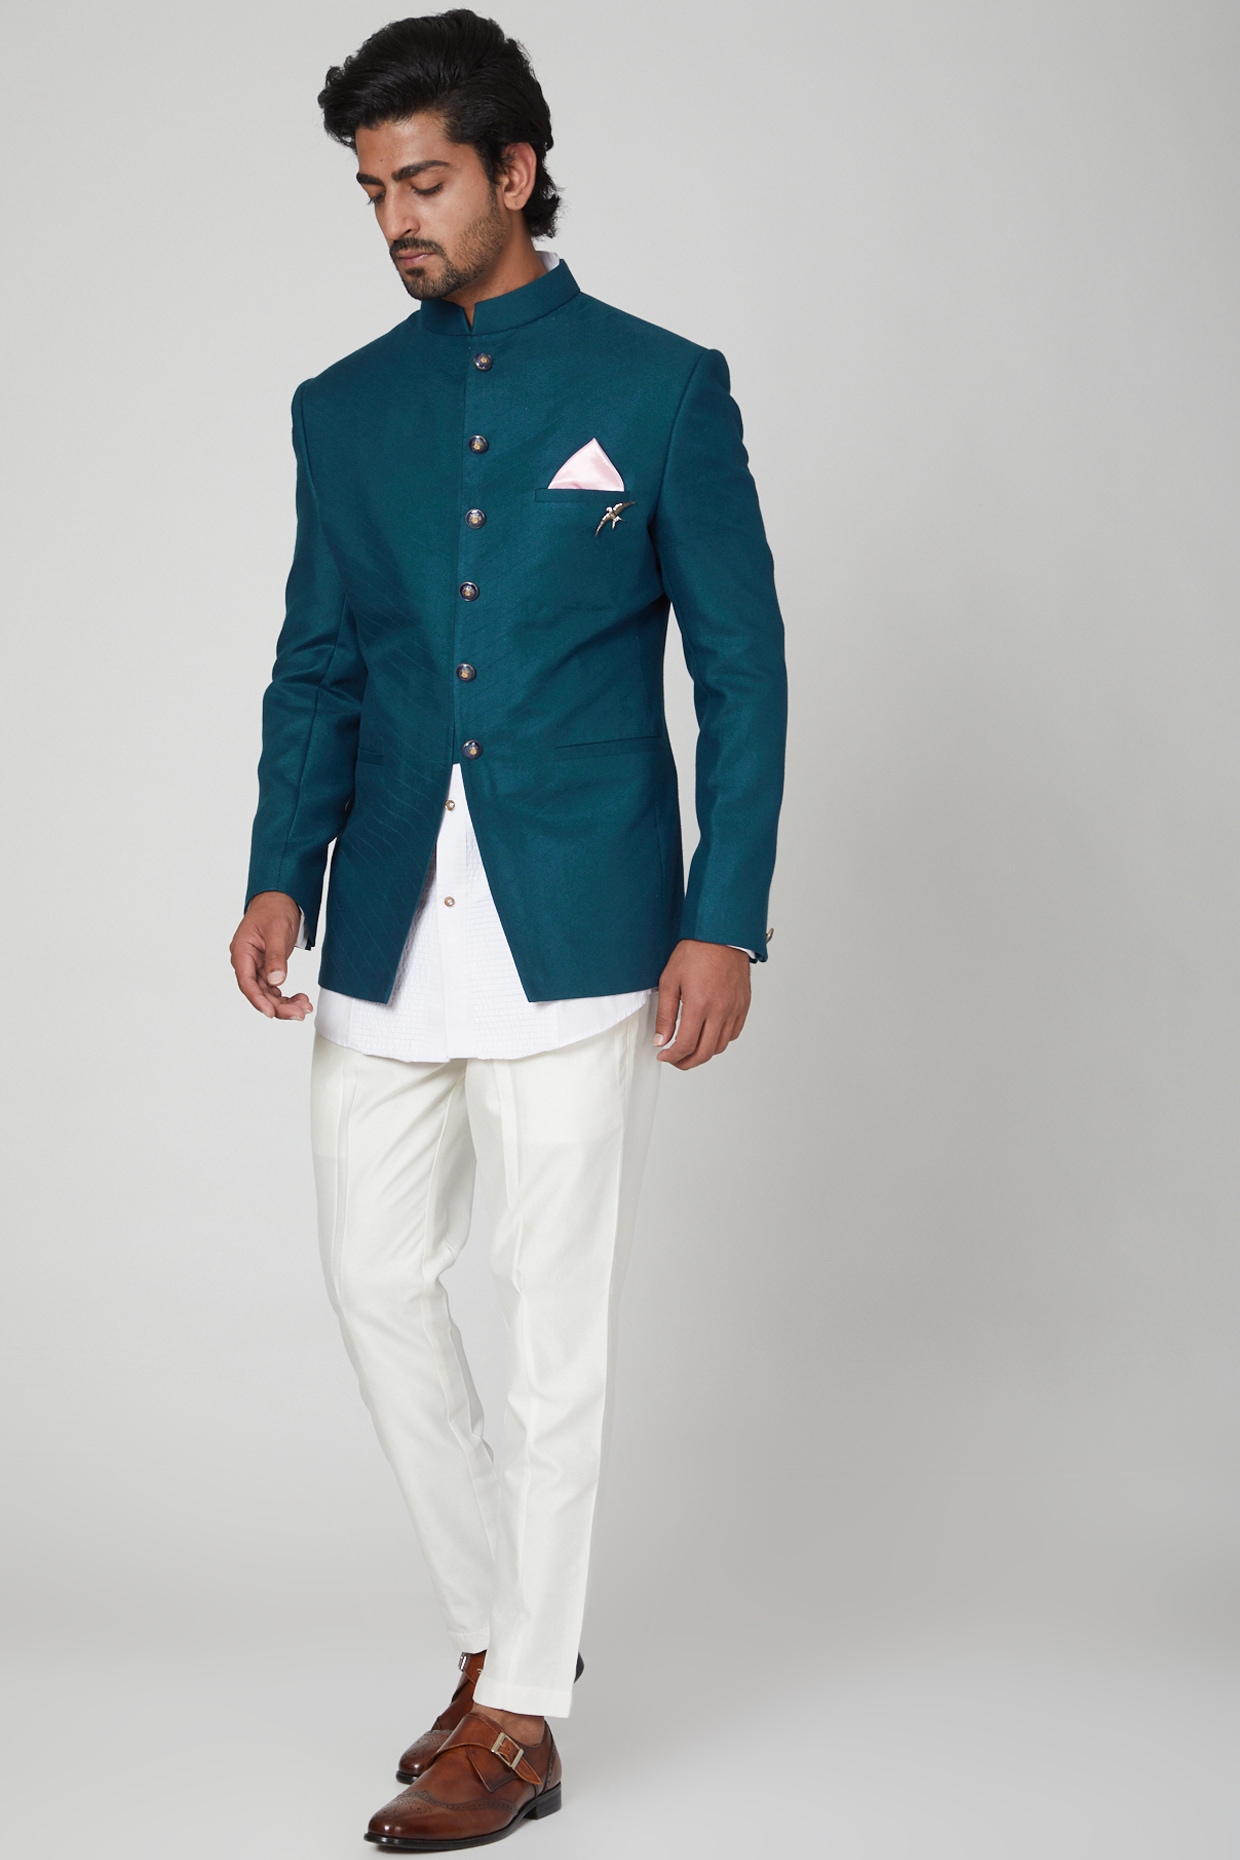 Jodhpuri Suit Navy Blue Velvet Self Designer Jodhpuri Coat - Etsy | Dress  suits for men, Fashion suits for men, Jodhpuri suits for men